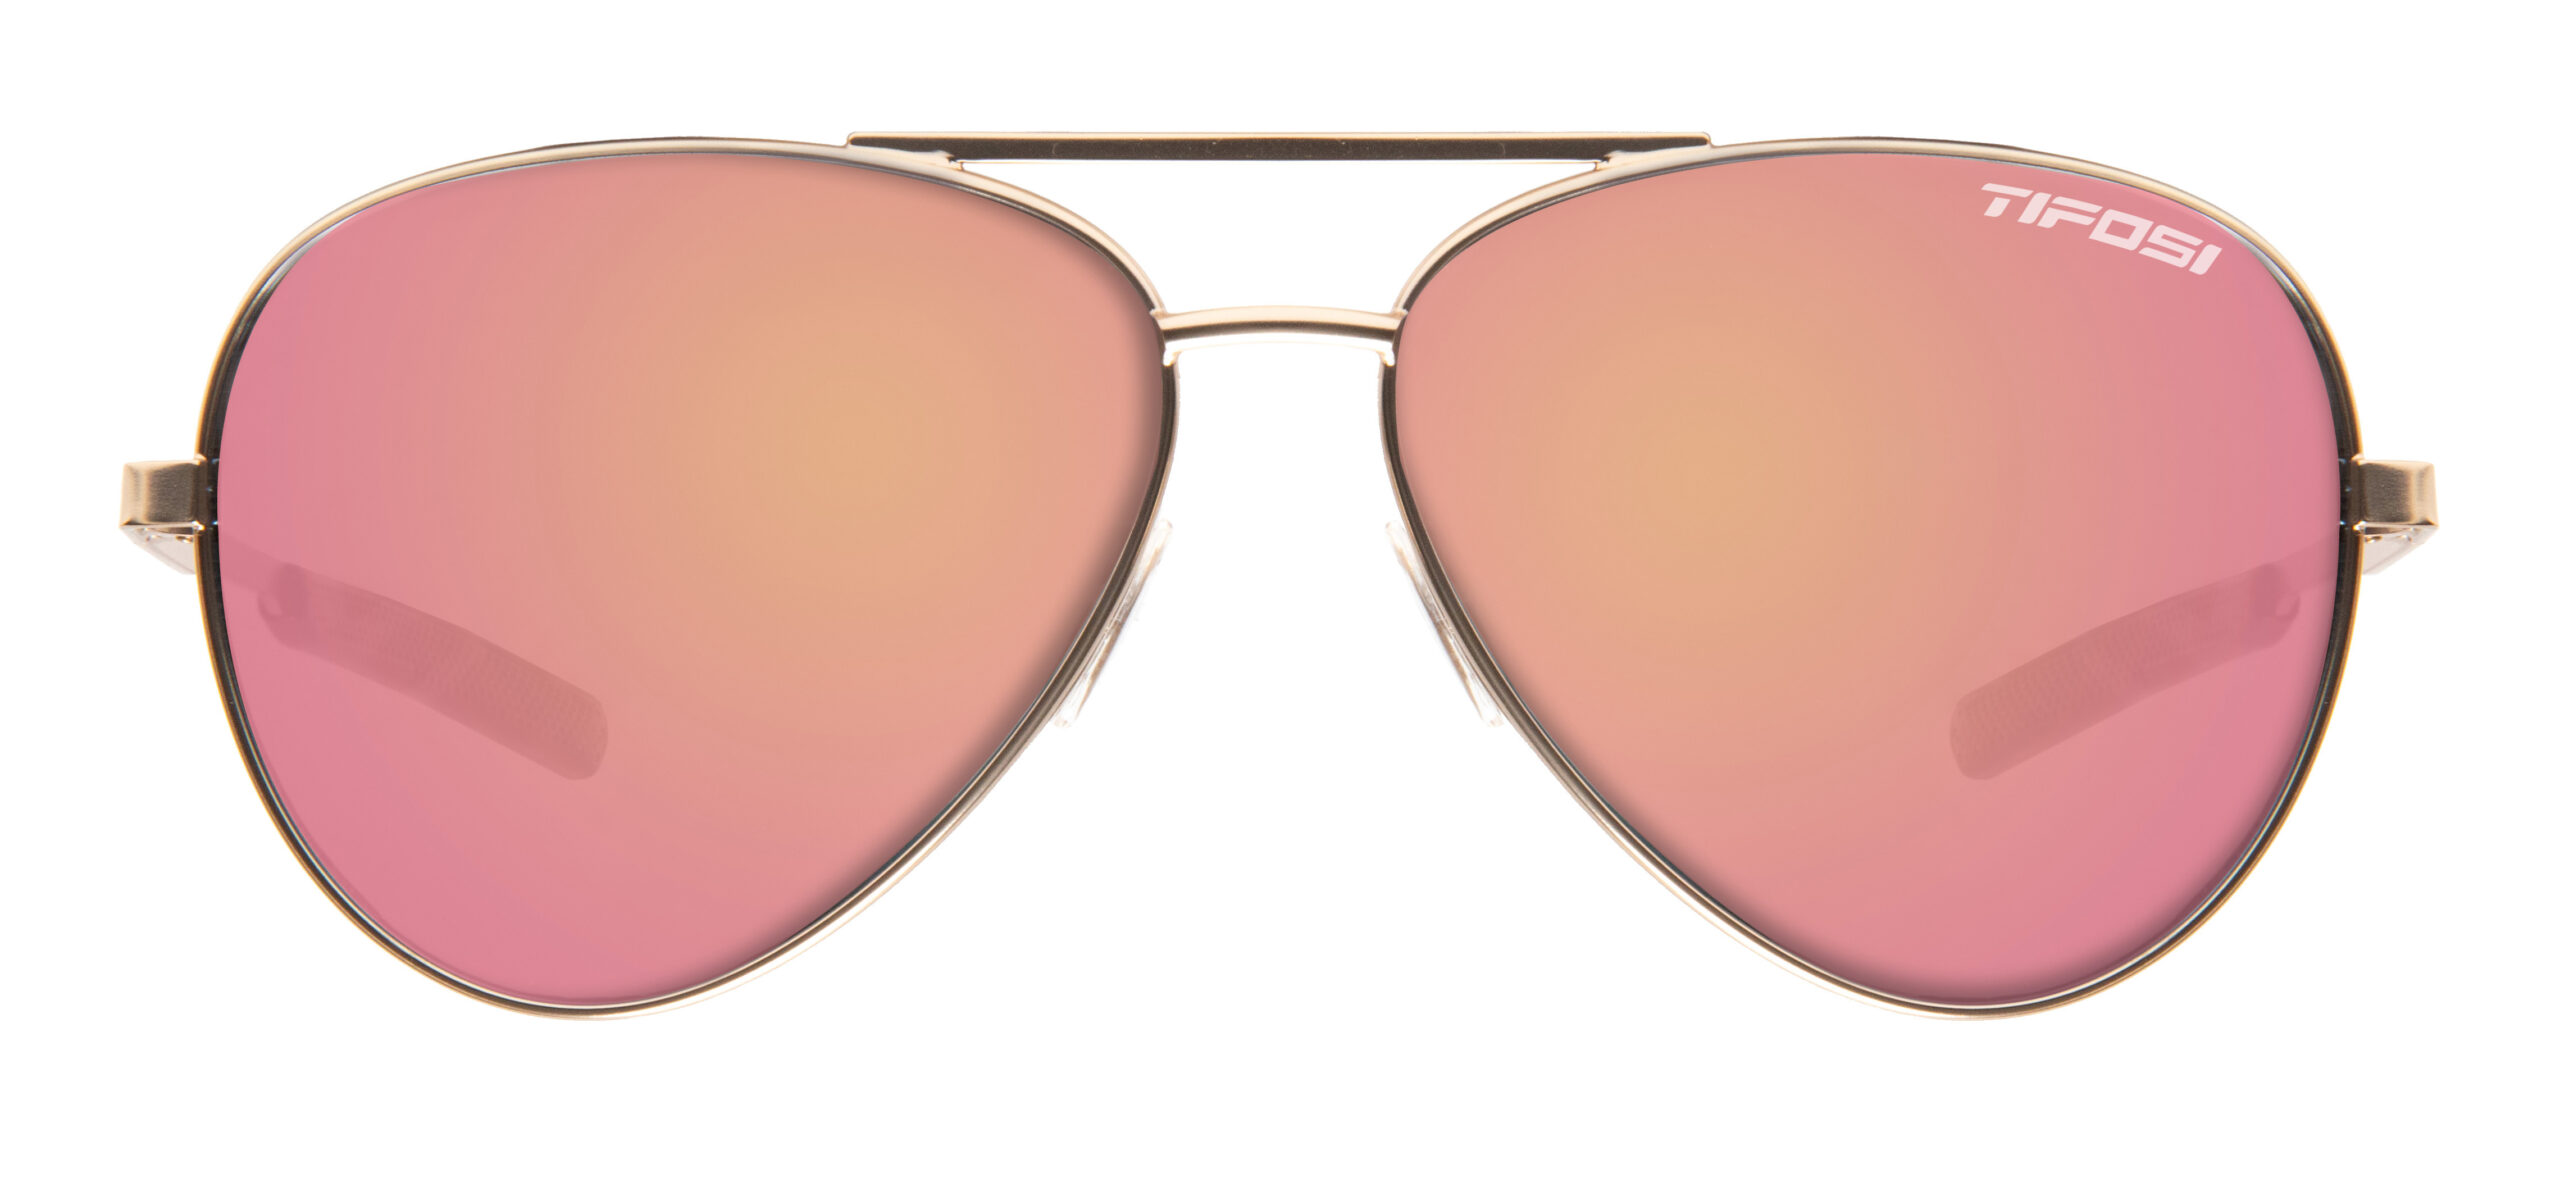 Ray-Ban Aviator RB3025 112/1Q Gold Sunglasses